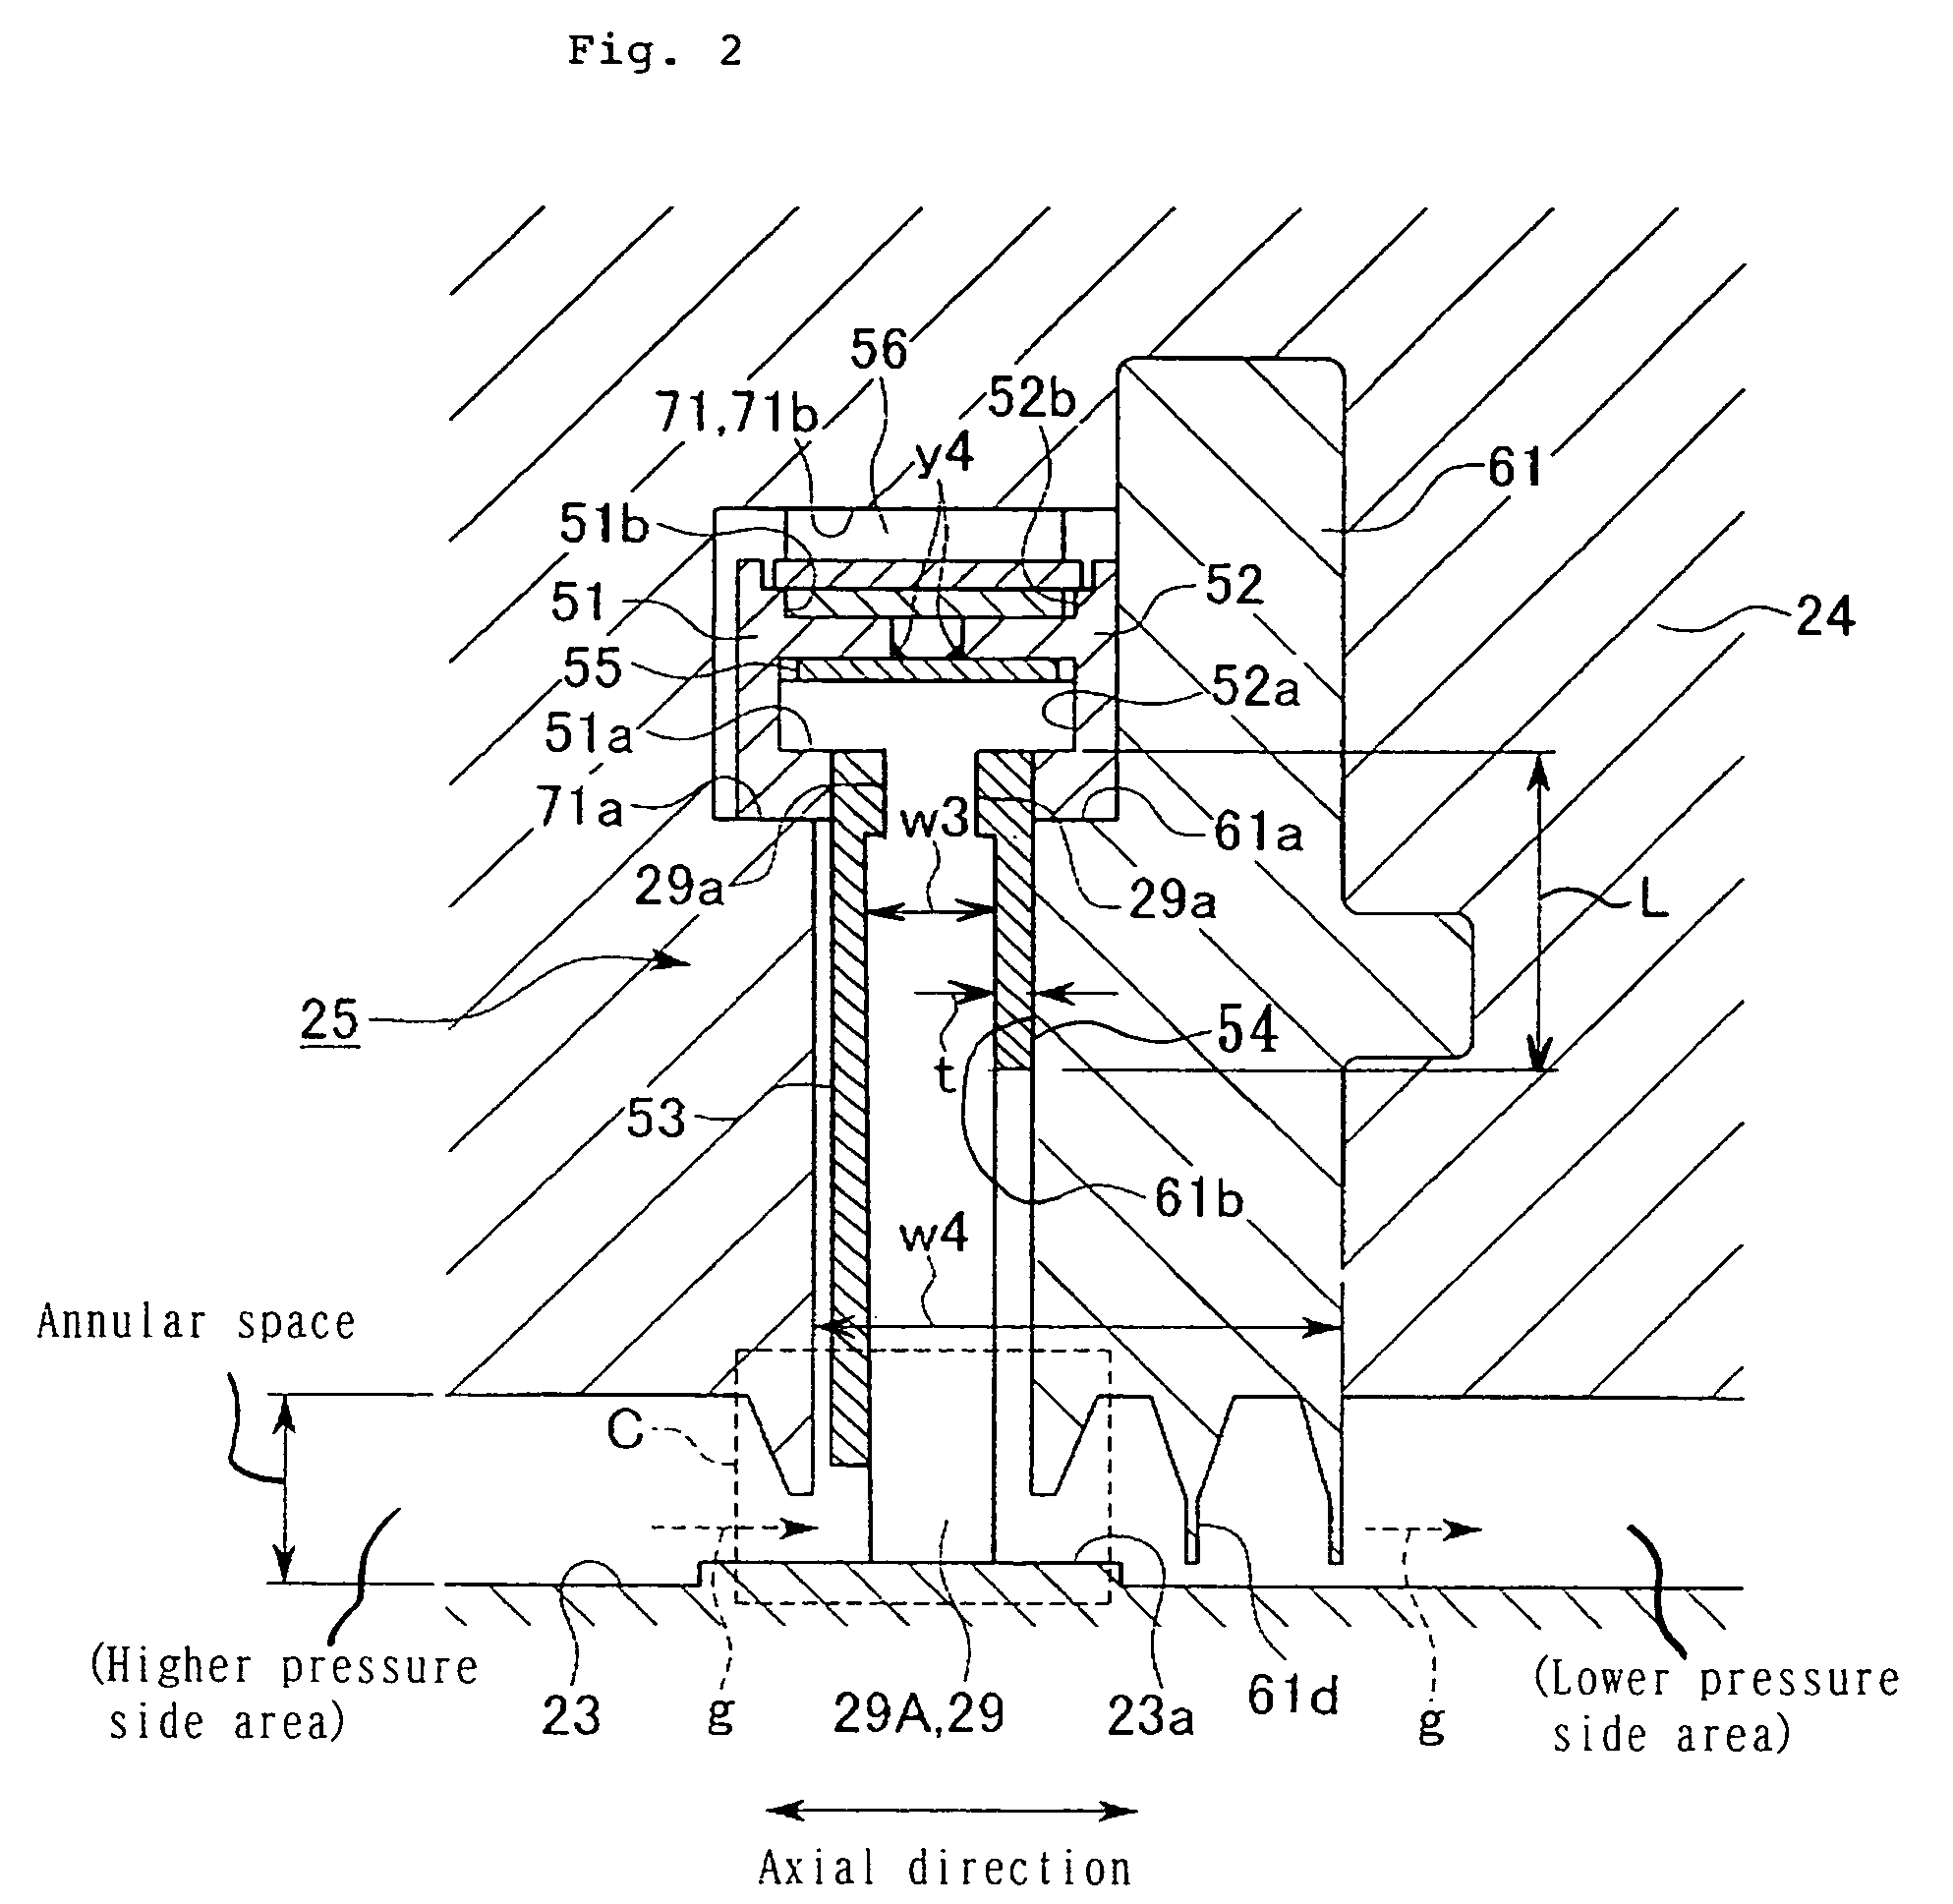 Shaft seal mechanism, shaft seal mechanism assembling structure and large size fluid machine